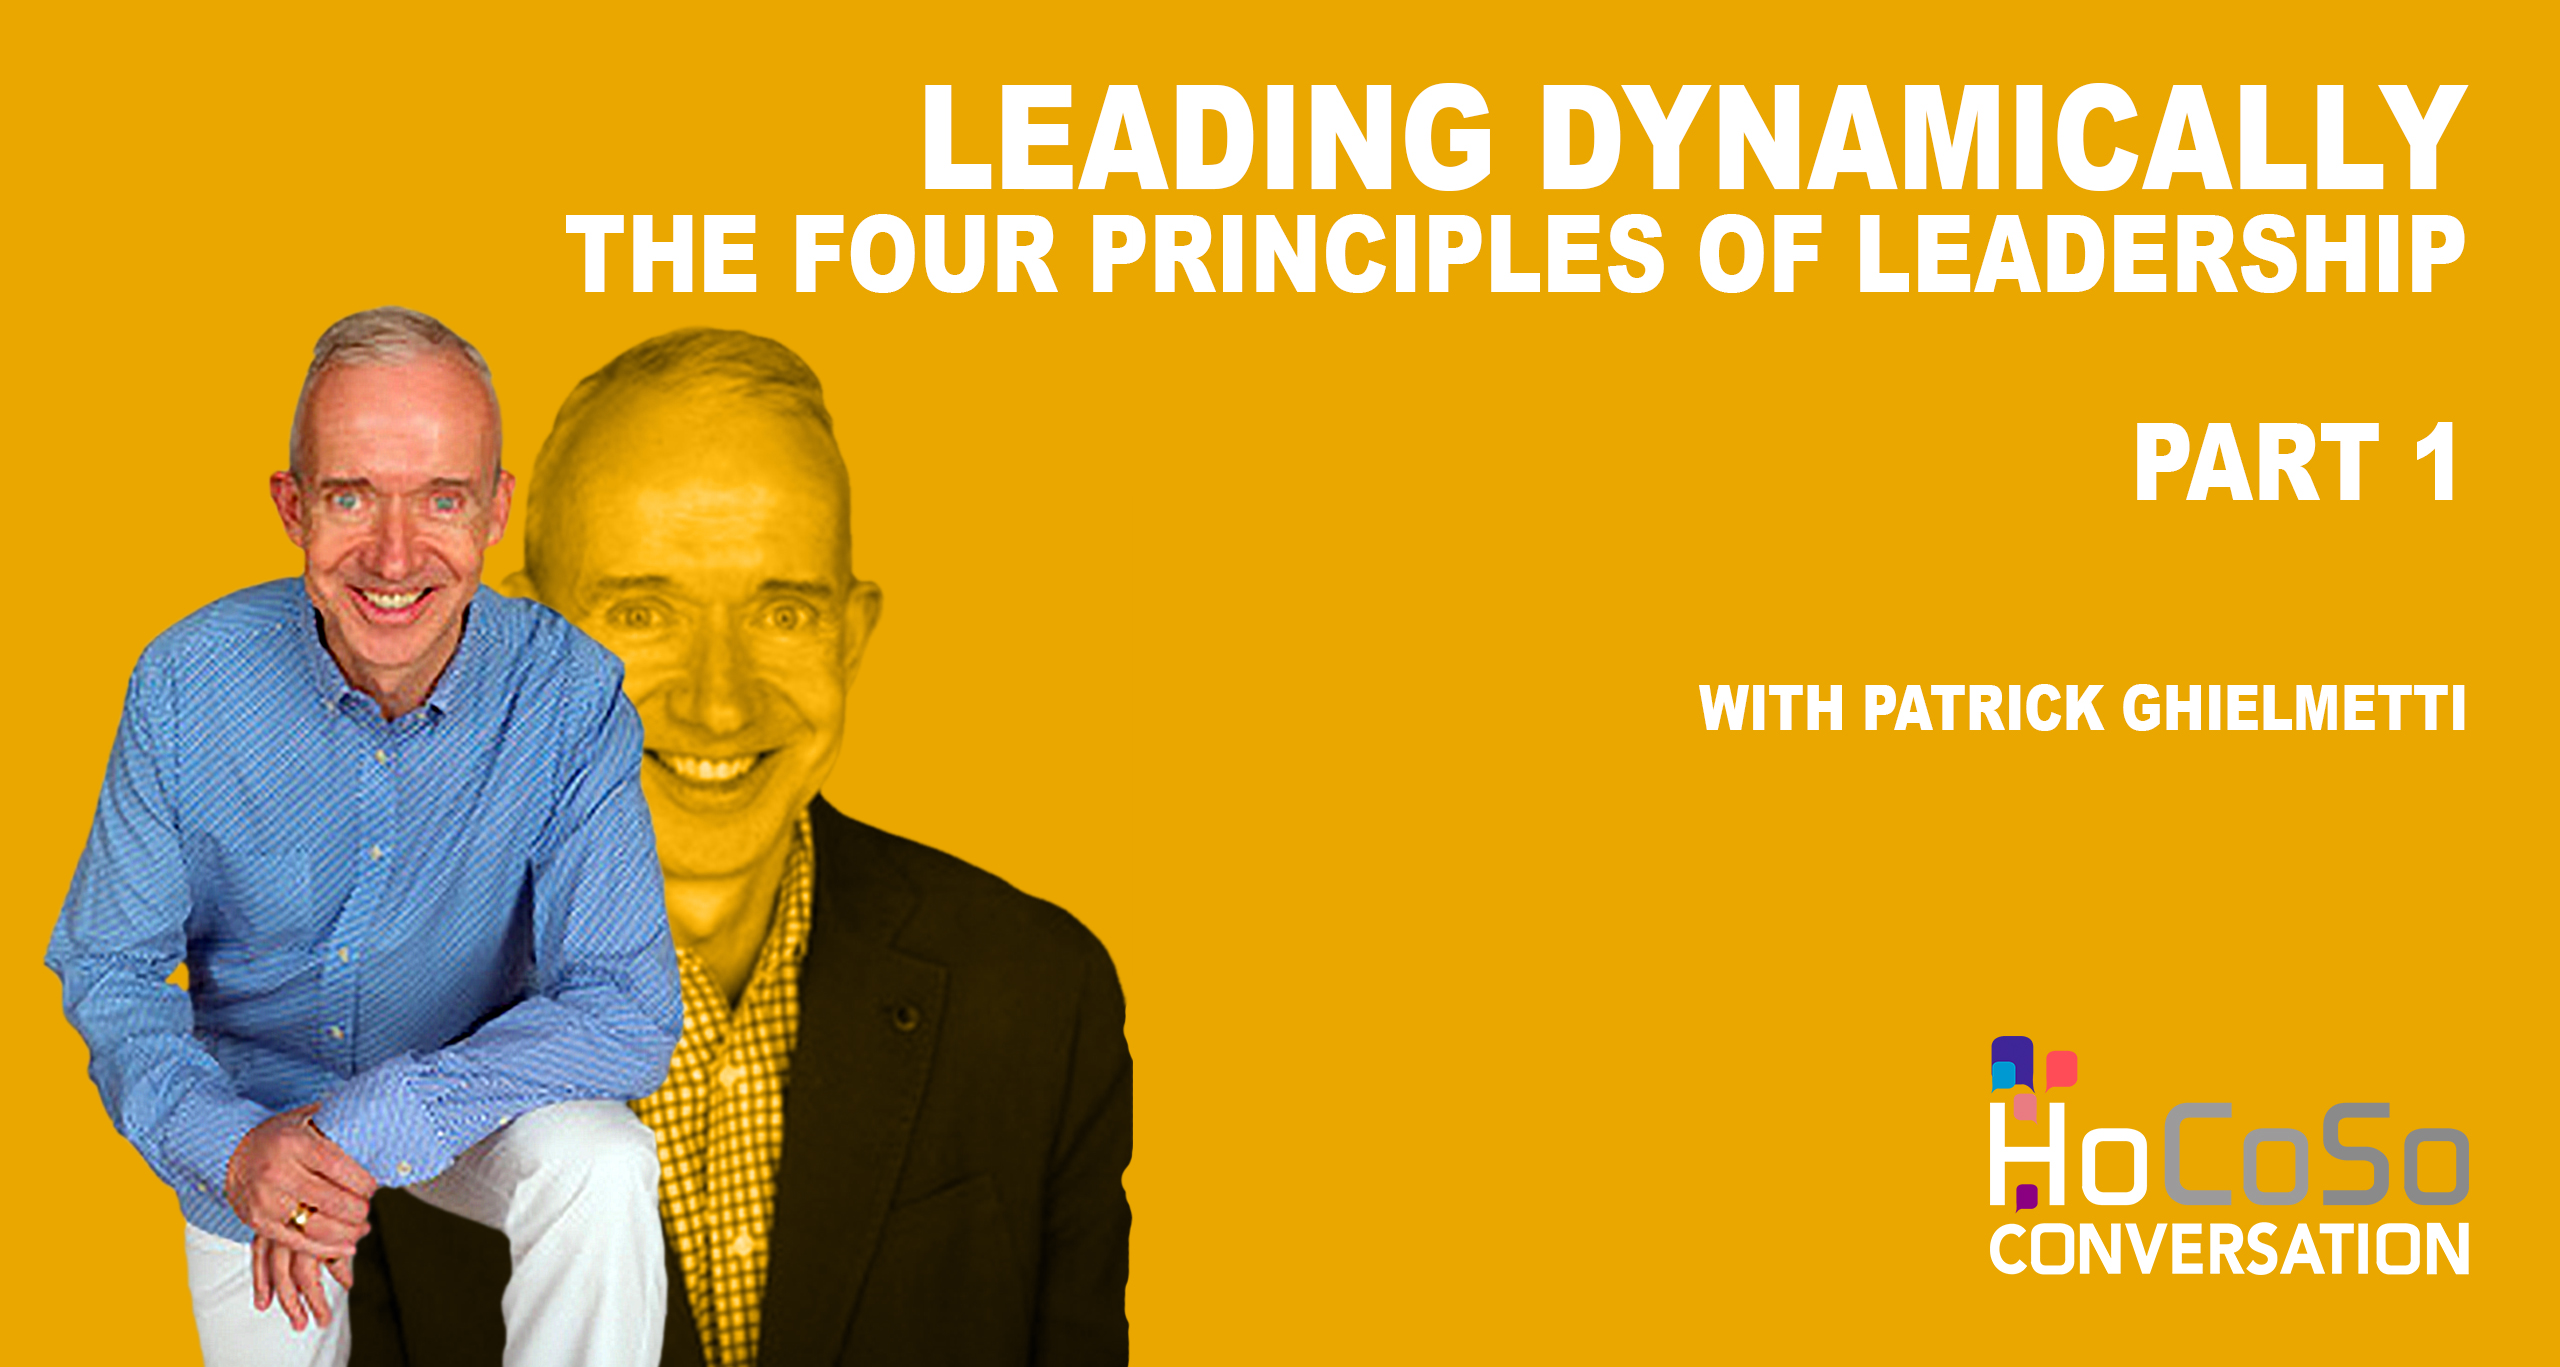 Leading Dynamically - Part 1 - Patrick Ghielmetti for HoCoSo CONVERSATION